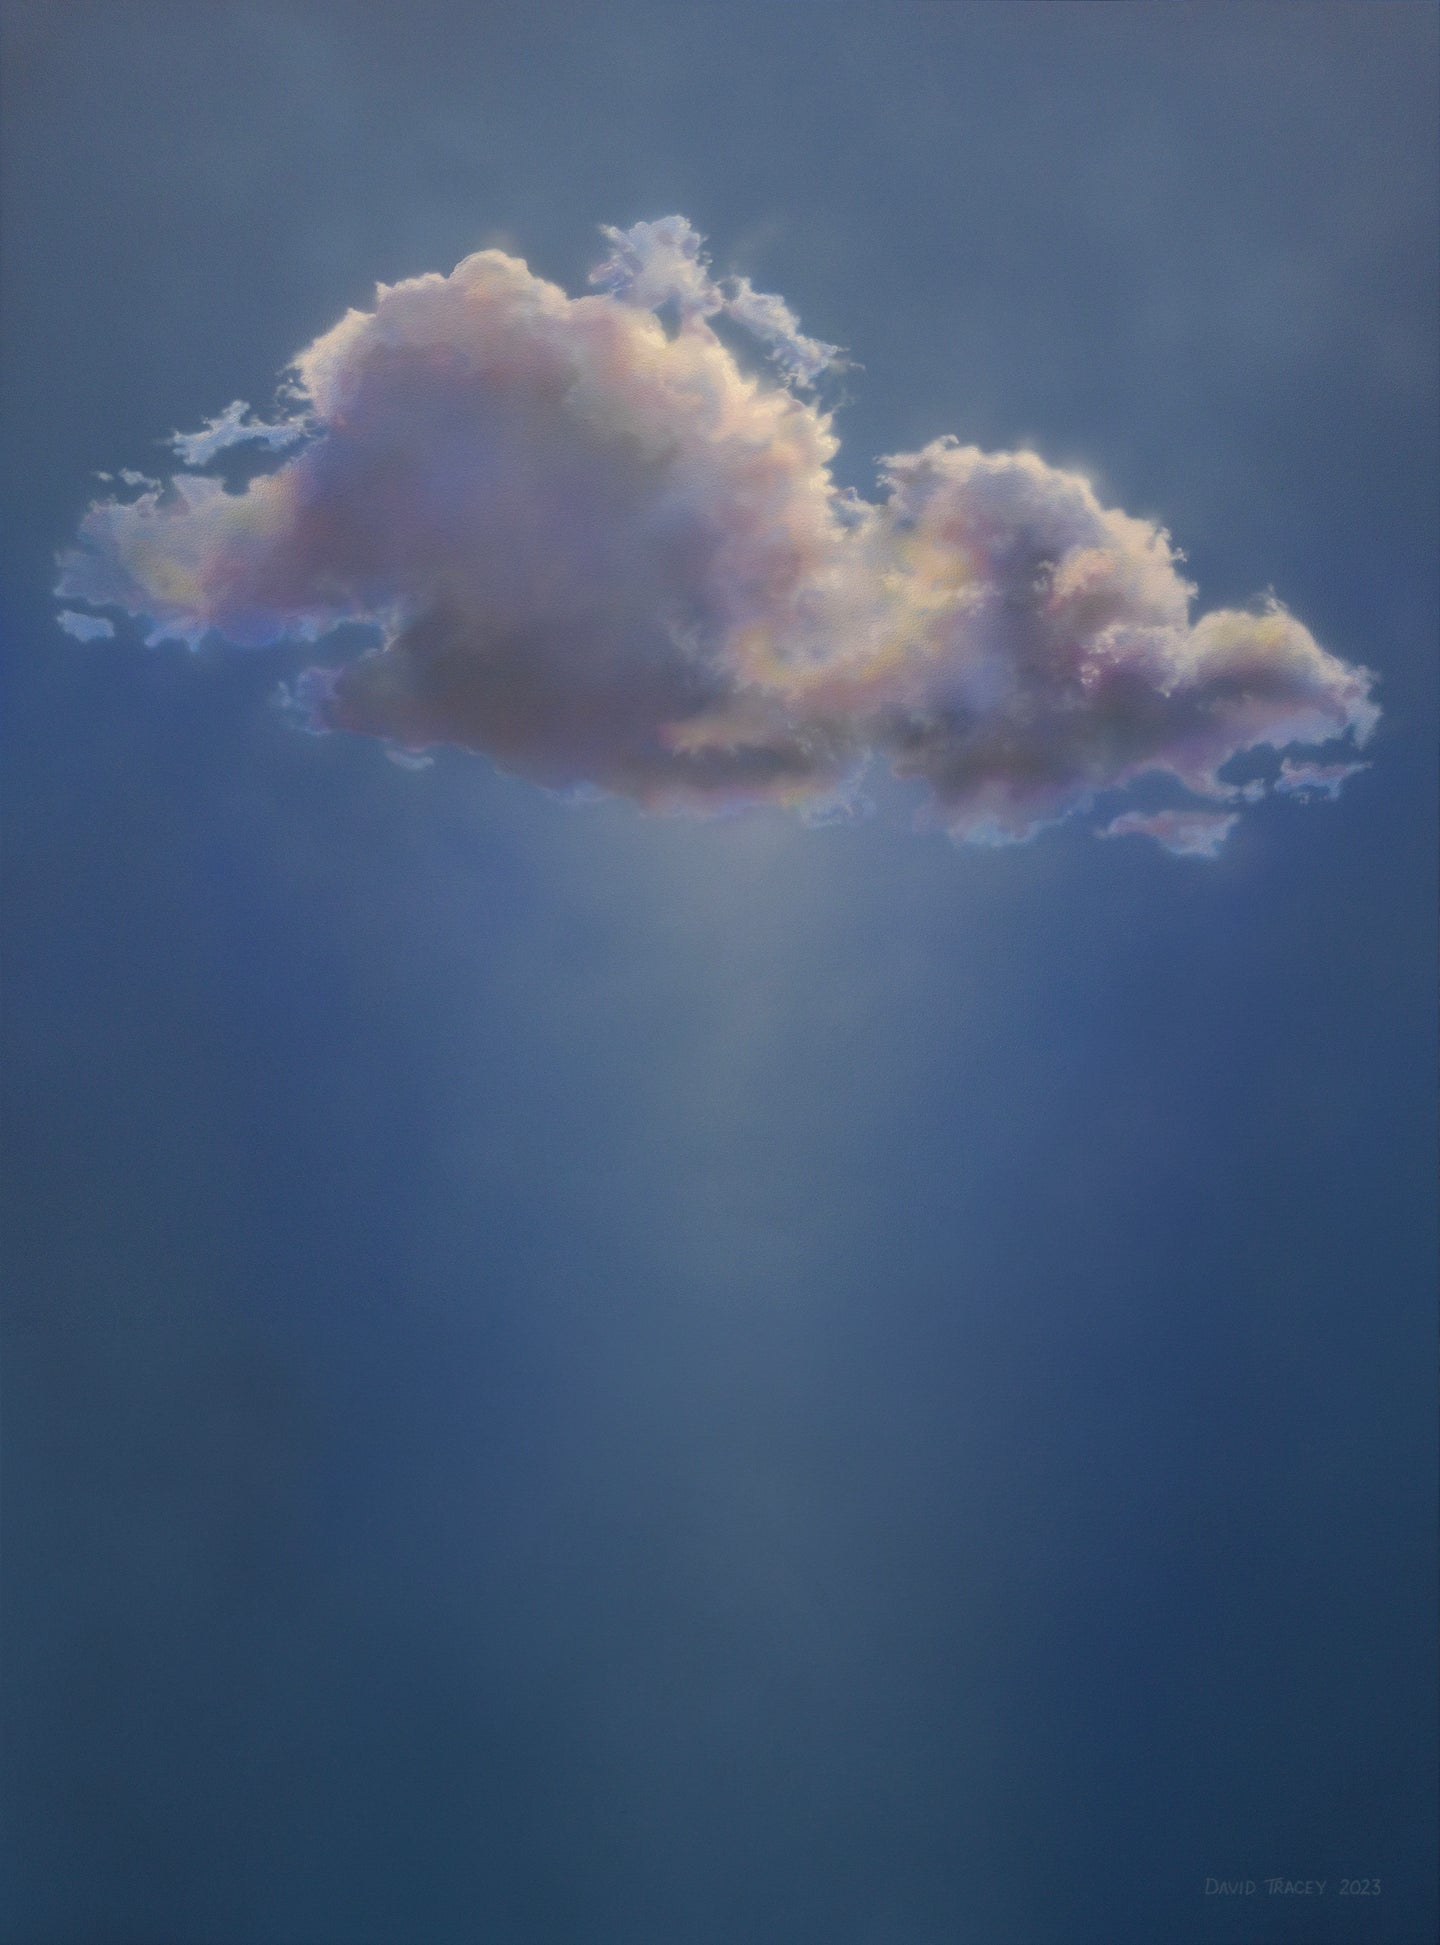 Cloud One on Dark (1140 x 1580mm)